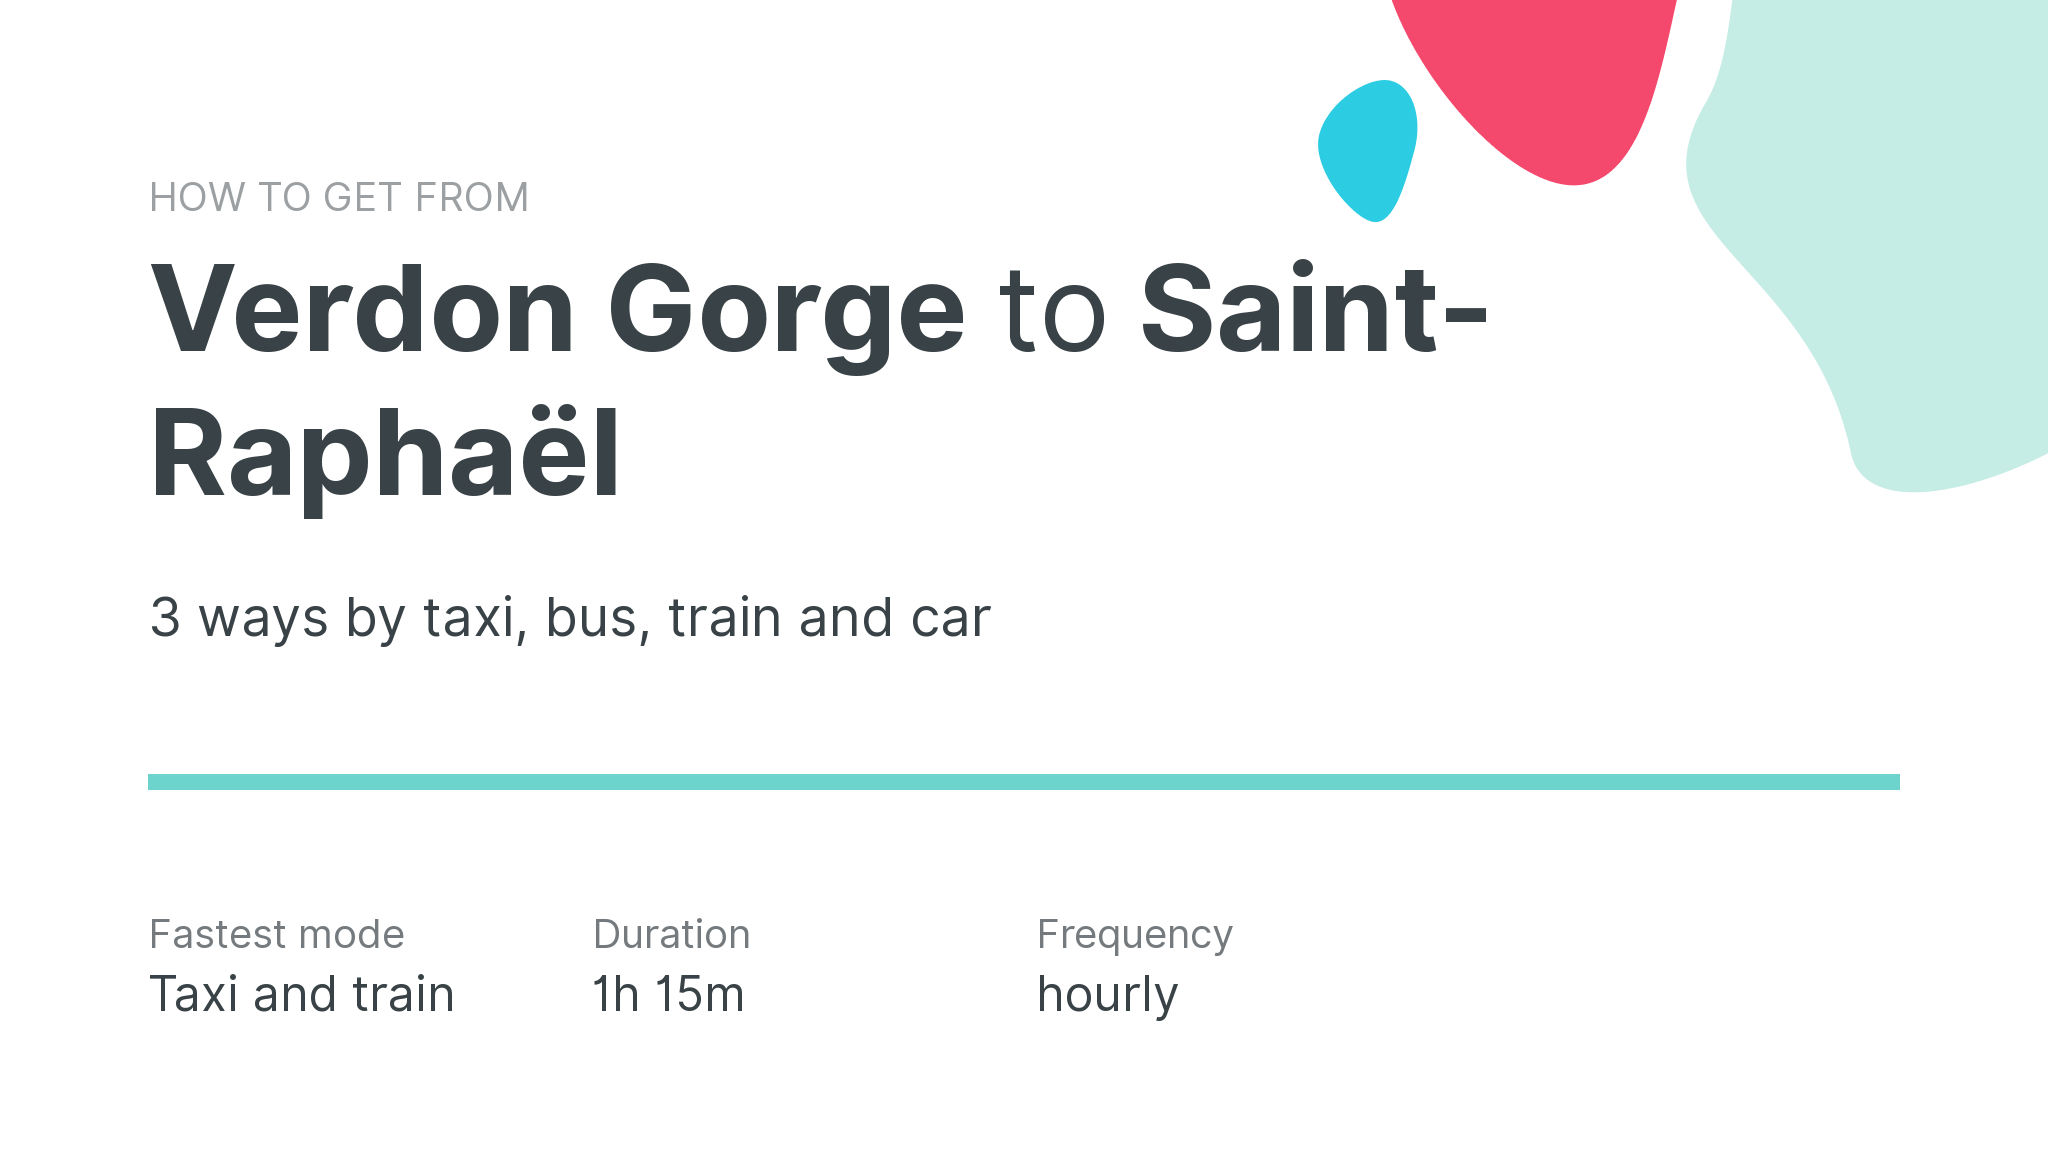 How do I get from Verdon Gorge to Saint-Raphaël